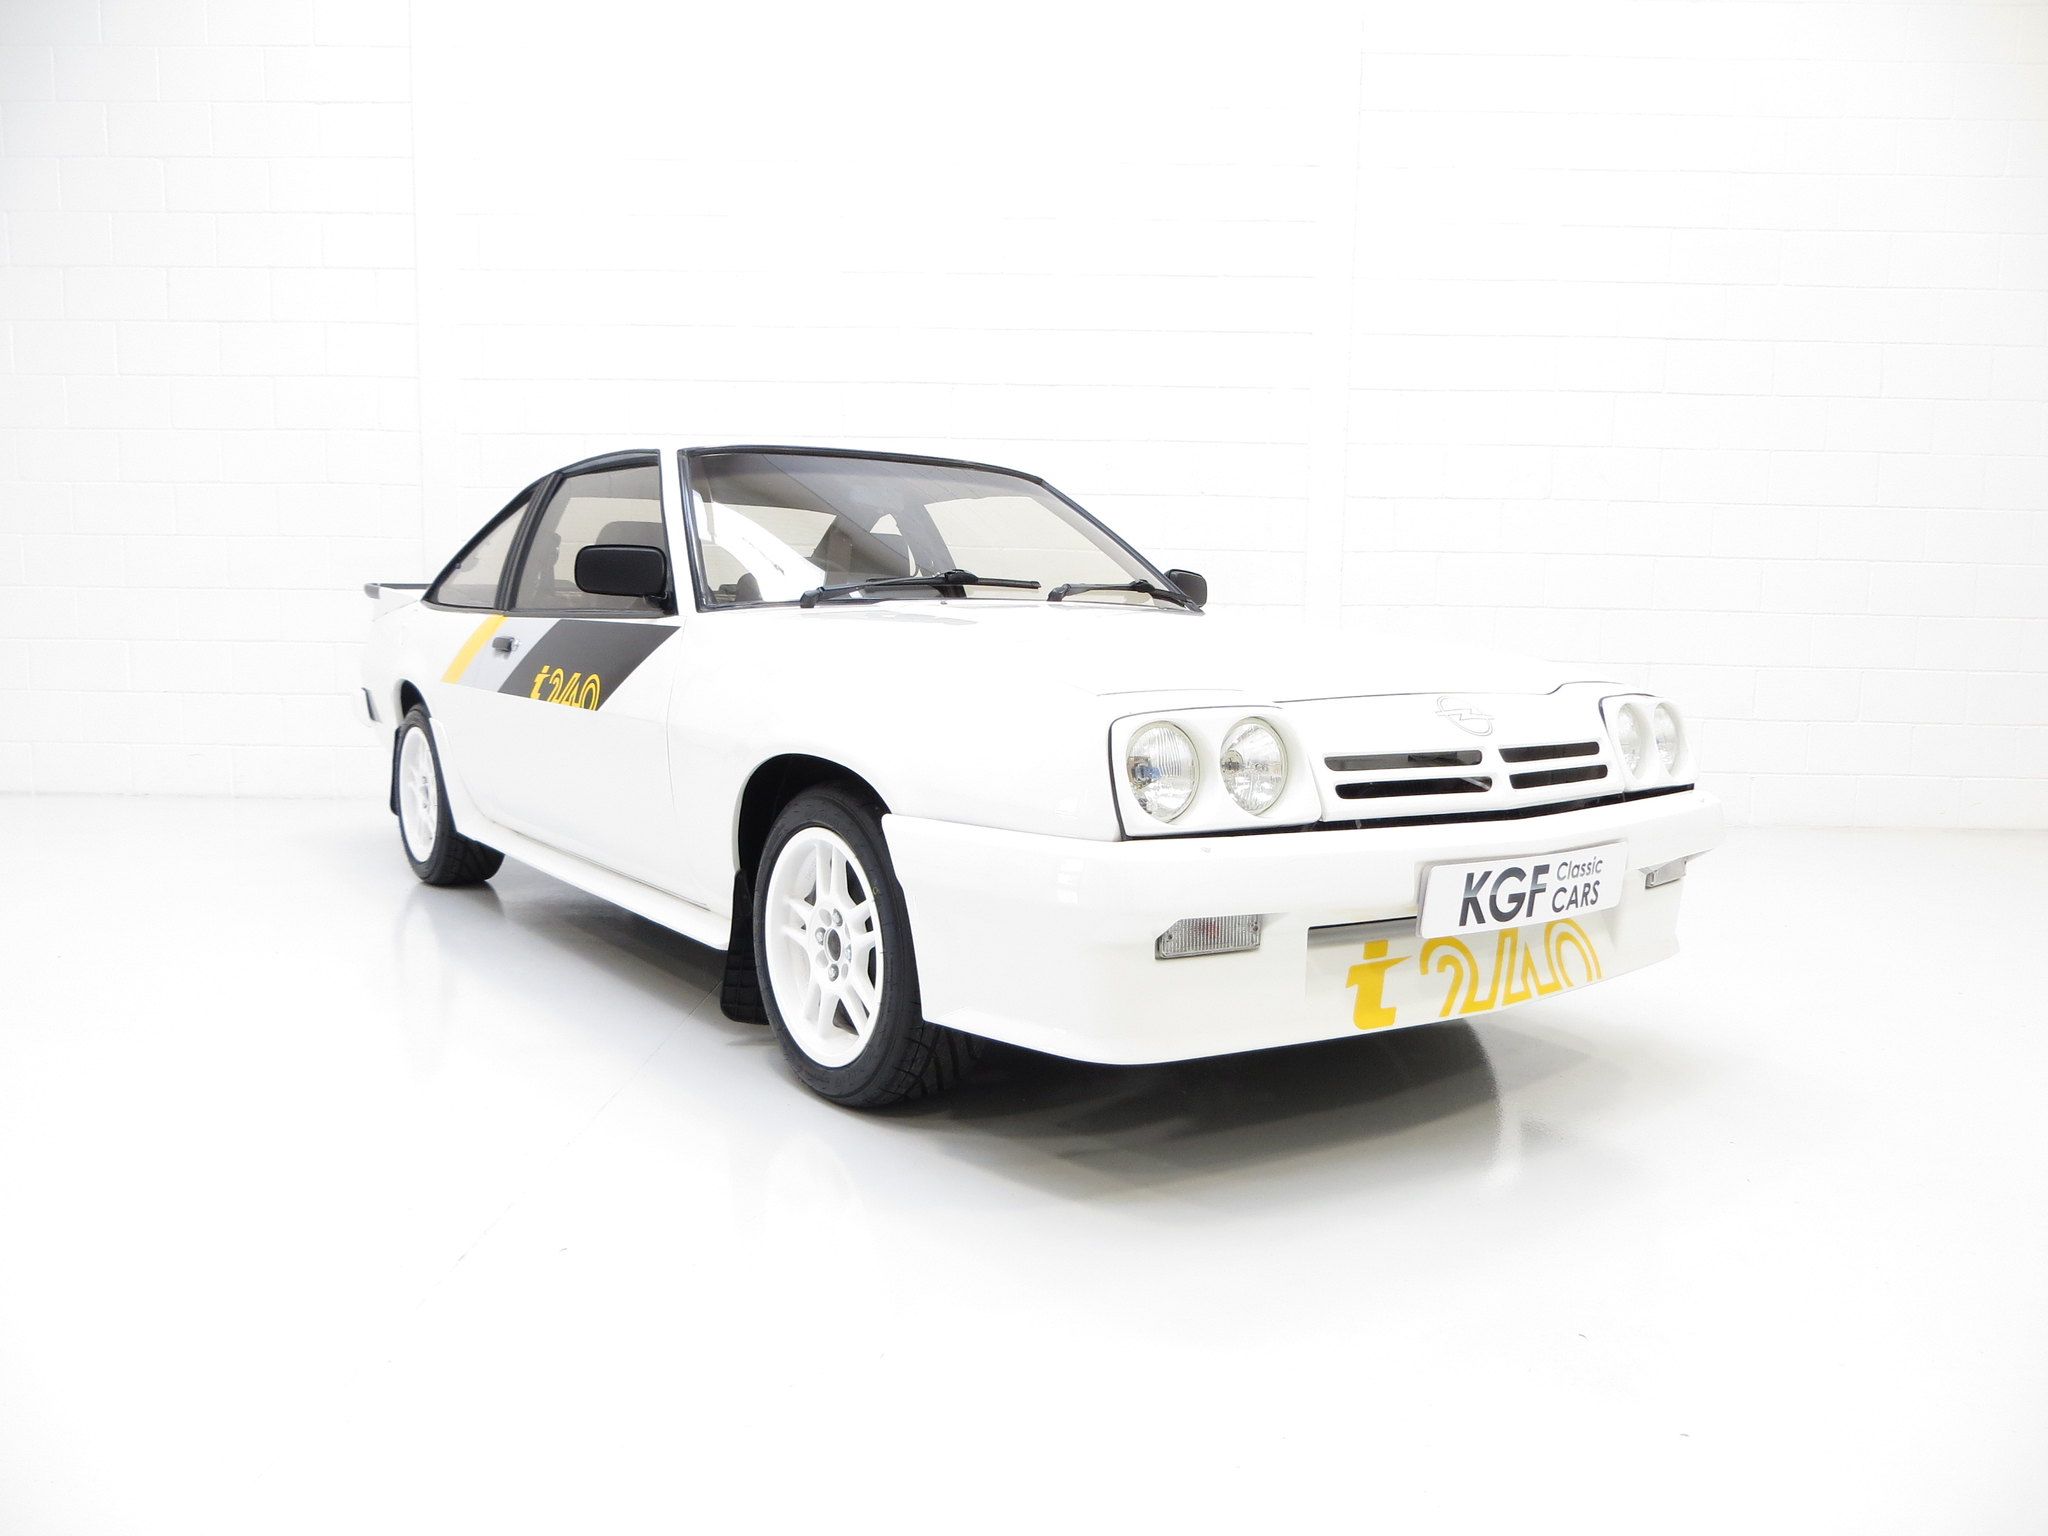 Opel Manta i240 Coupe Recreation – KGF